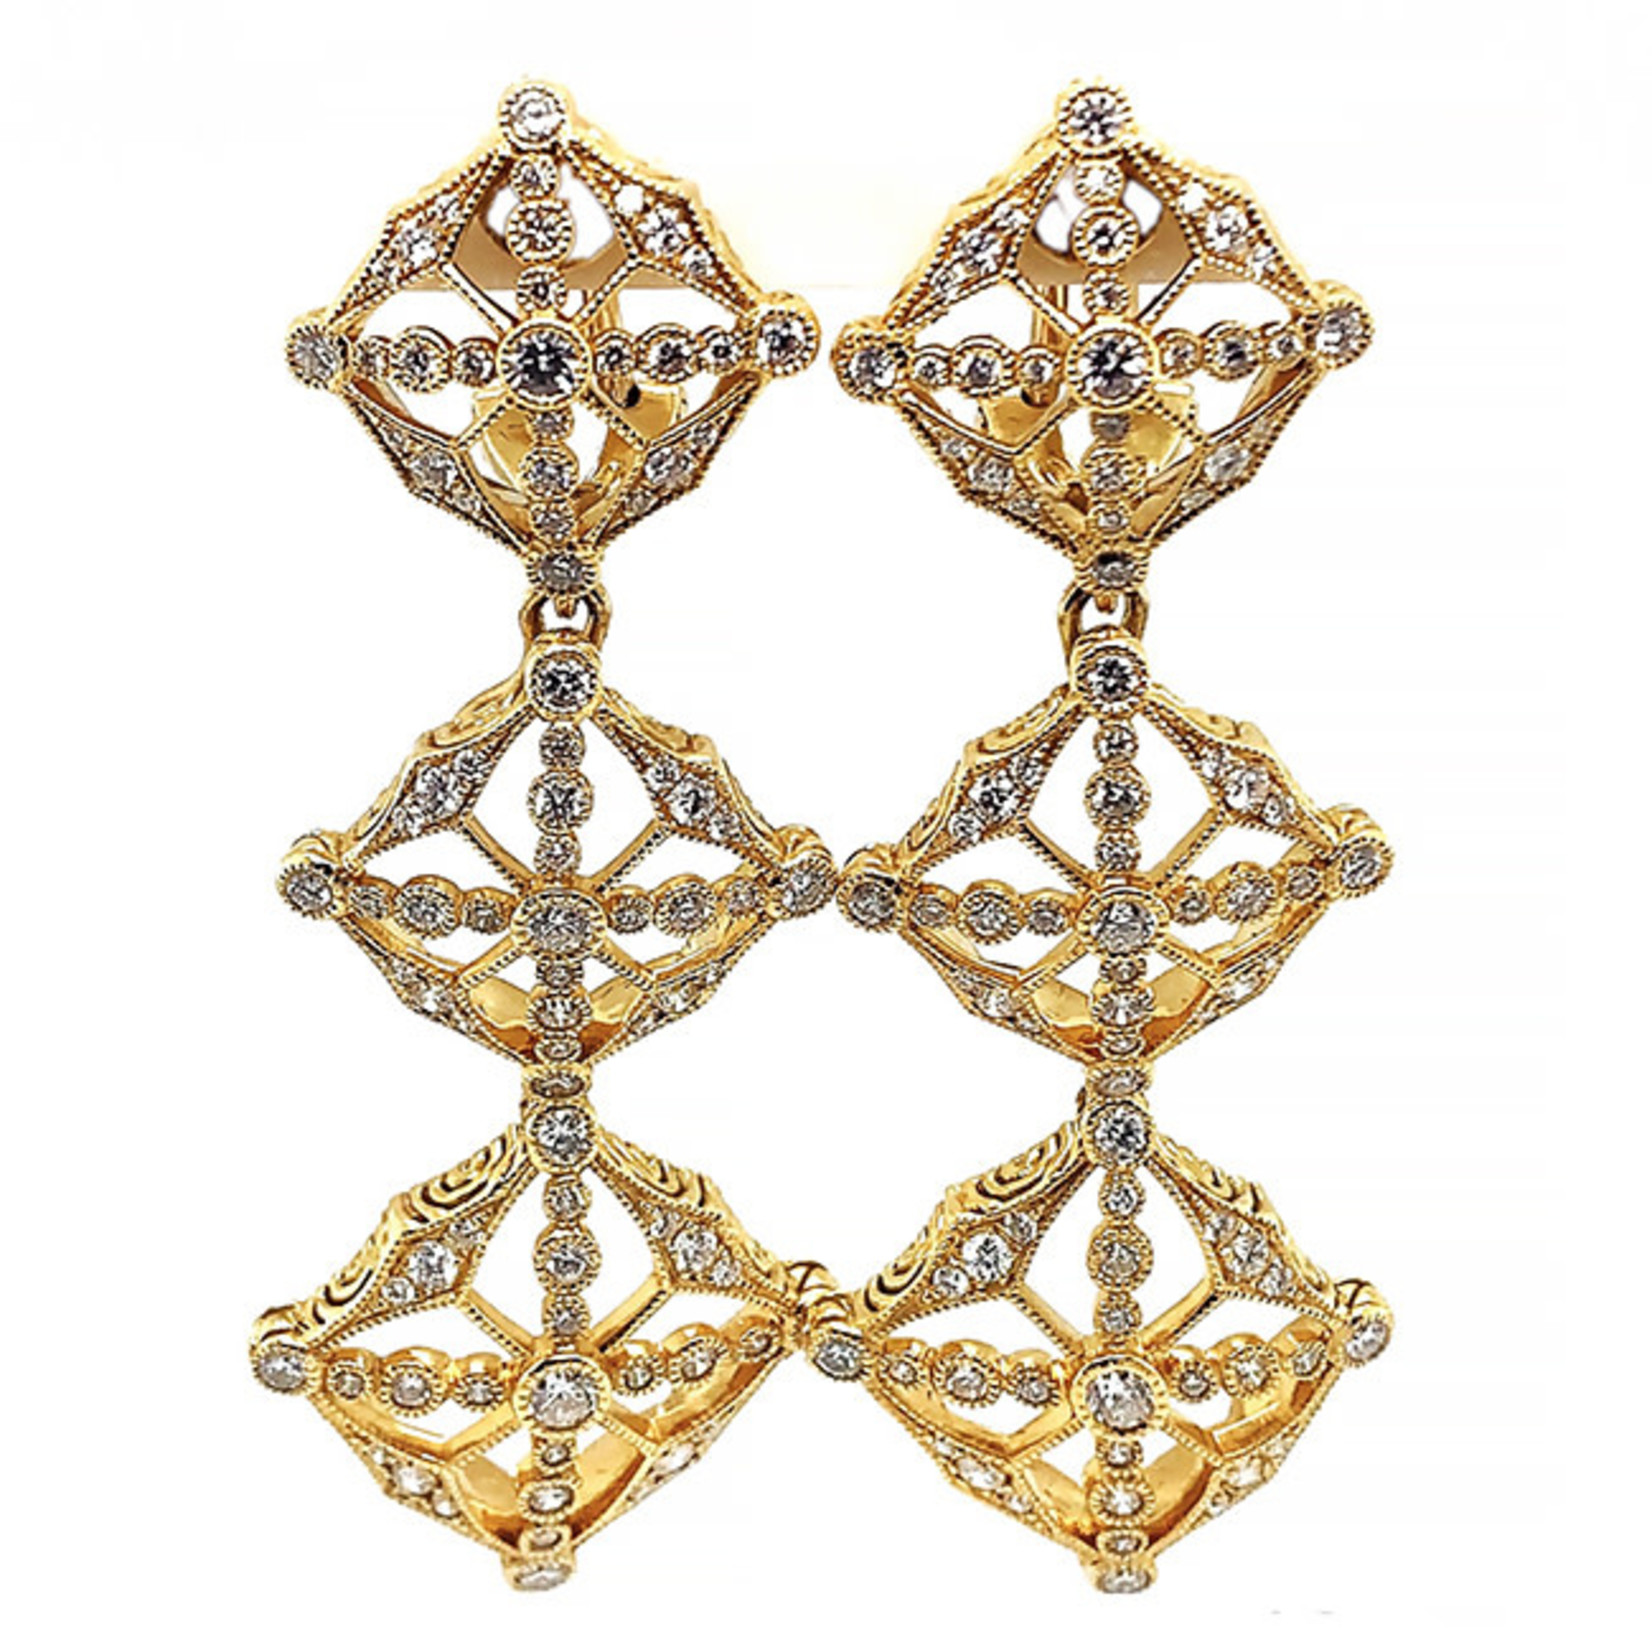 Jewelry By Danuta - Gold Drawer White Diamond 18kt. Gold Earrings